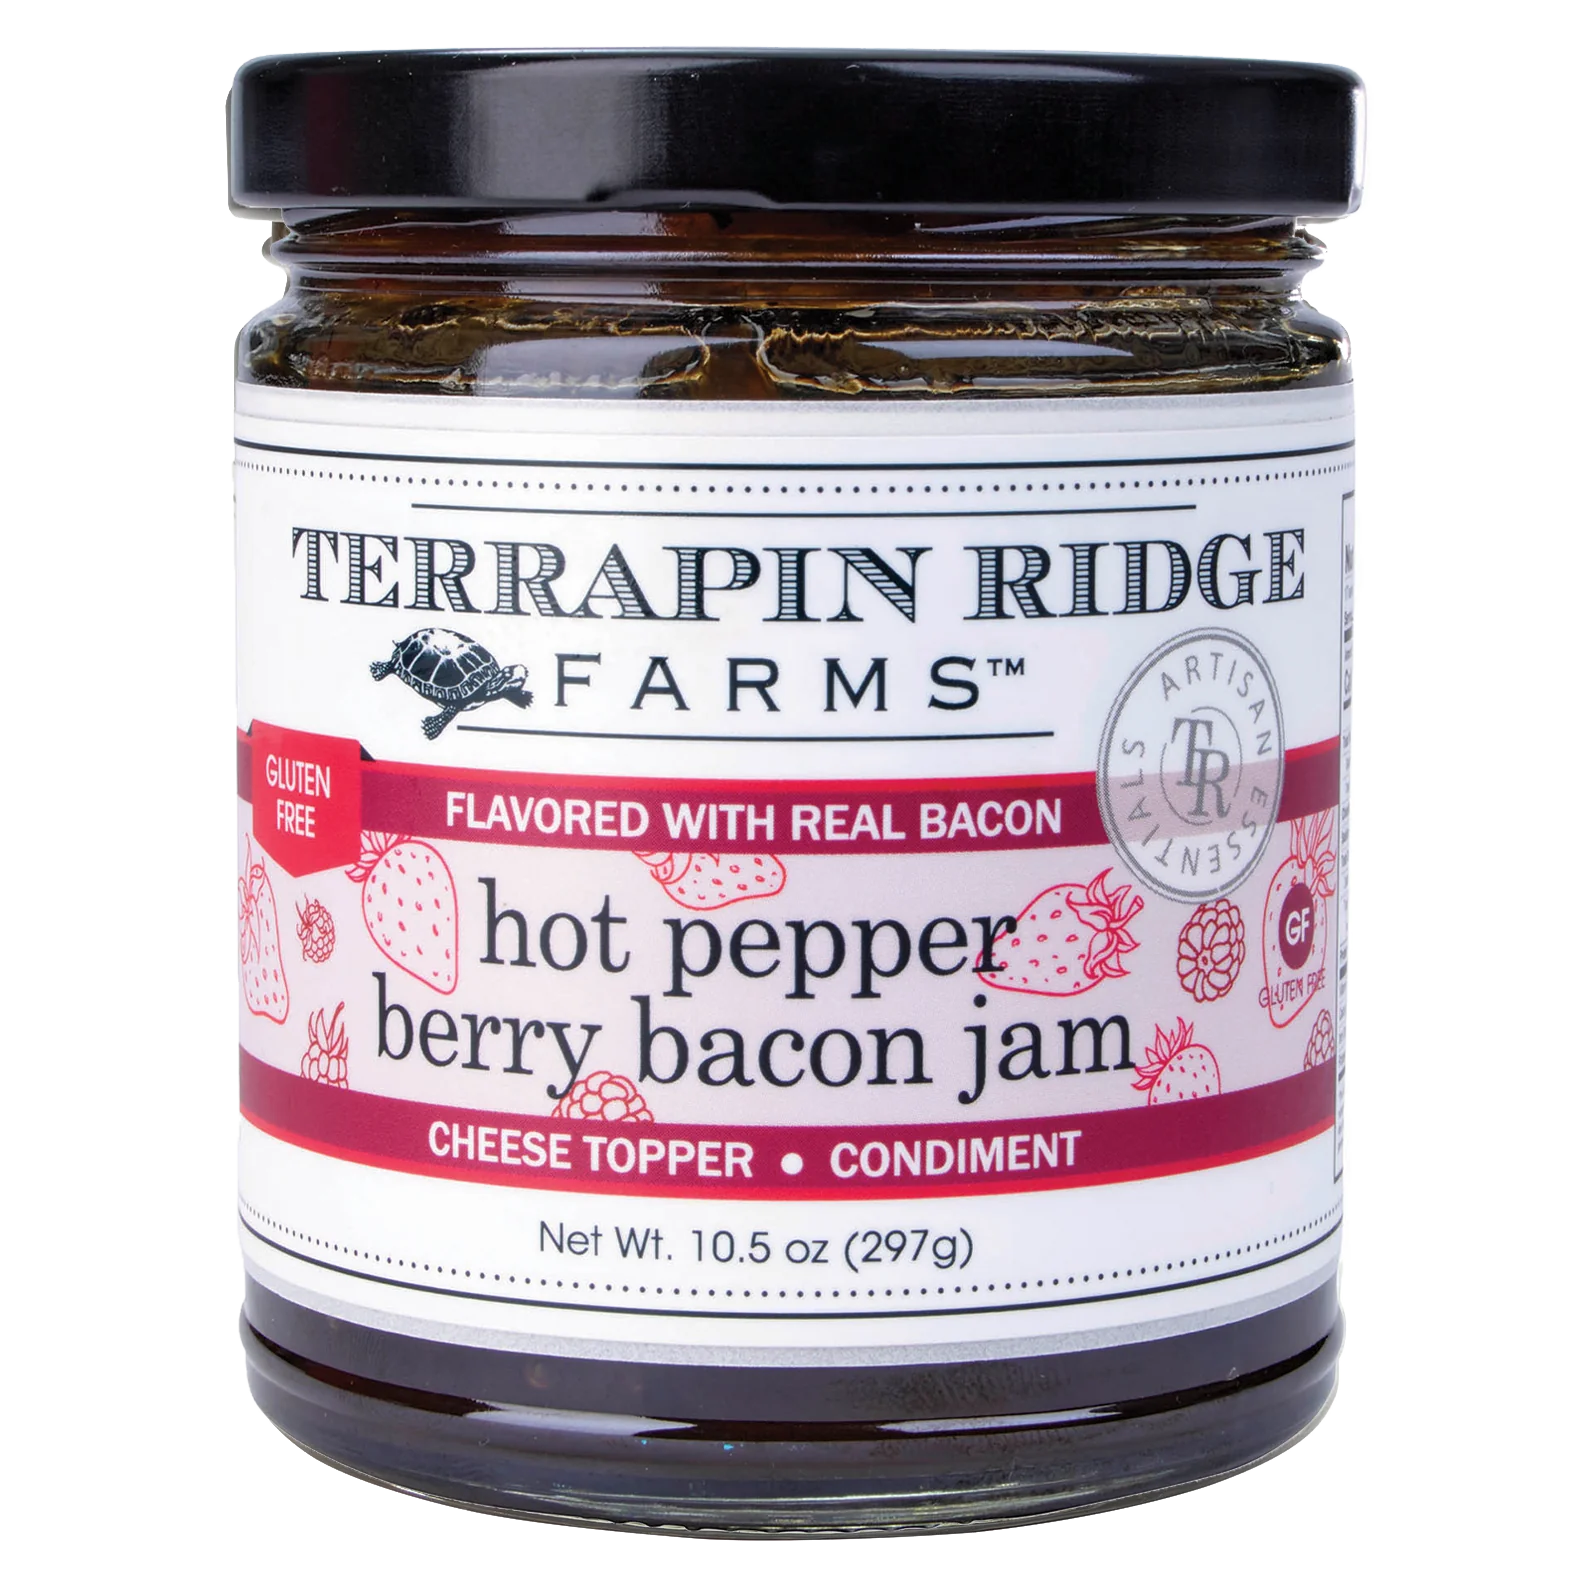 Hot Pepper Berry Bacon Jam by Terrapin Ridge